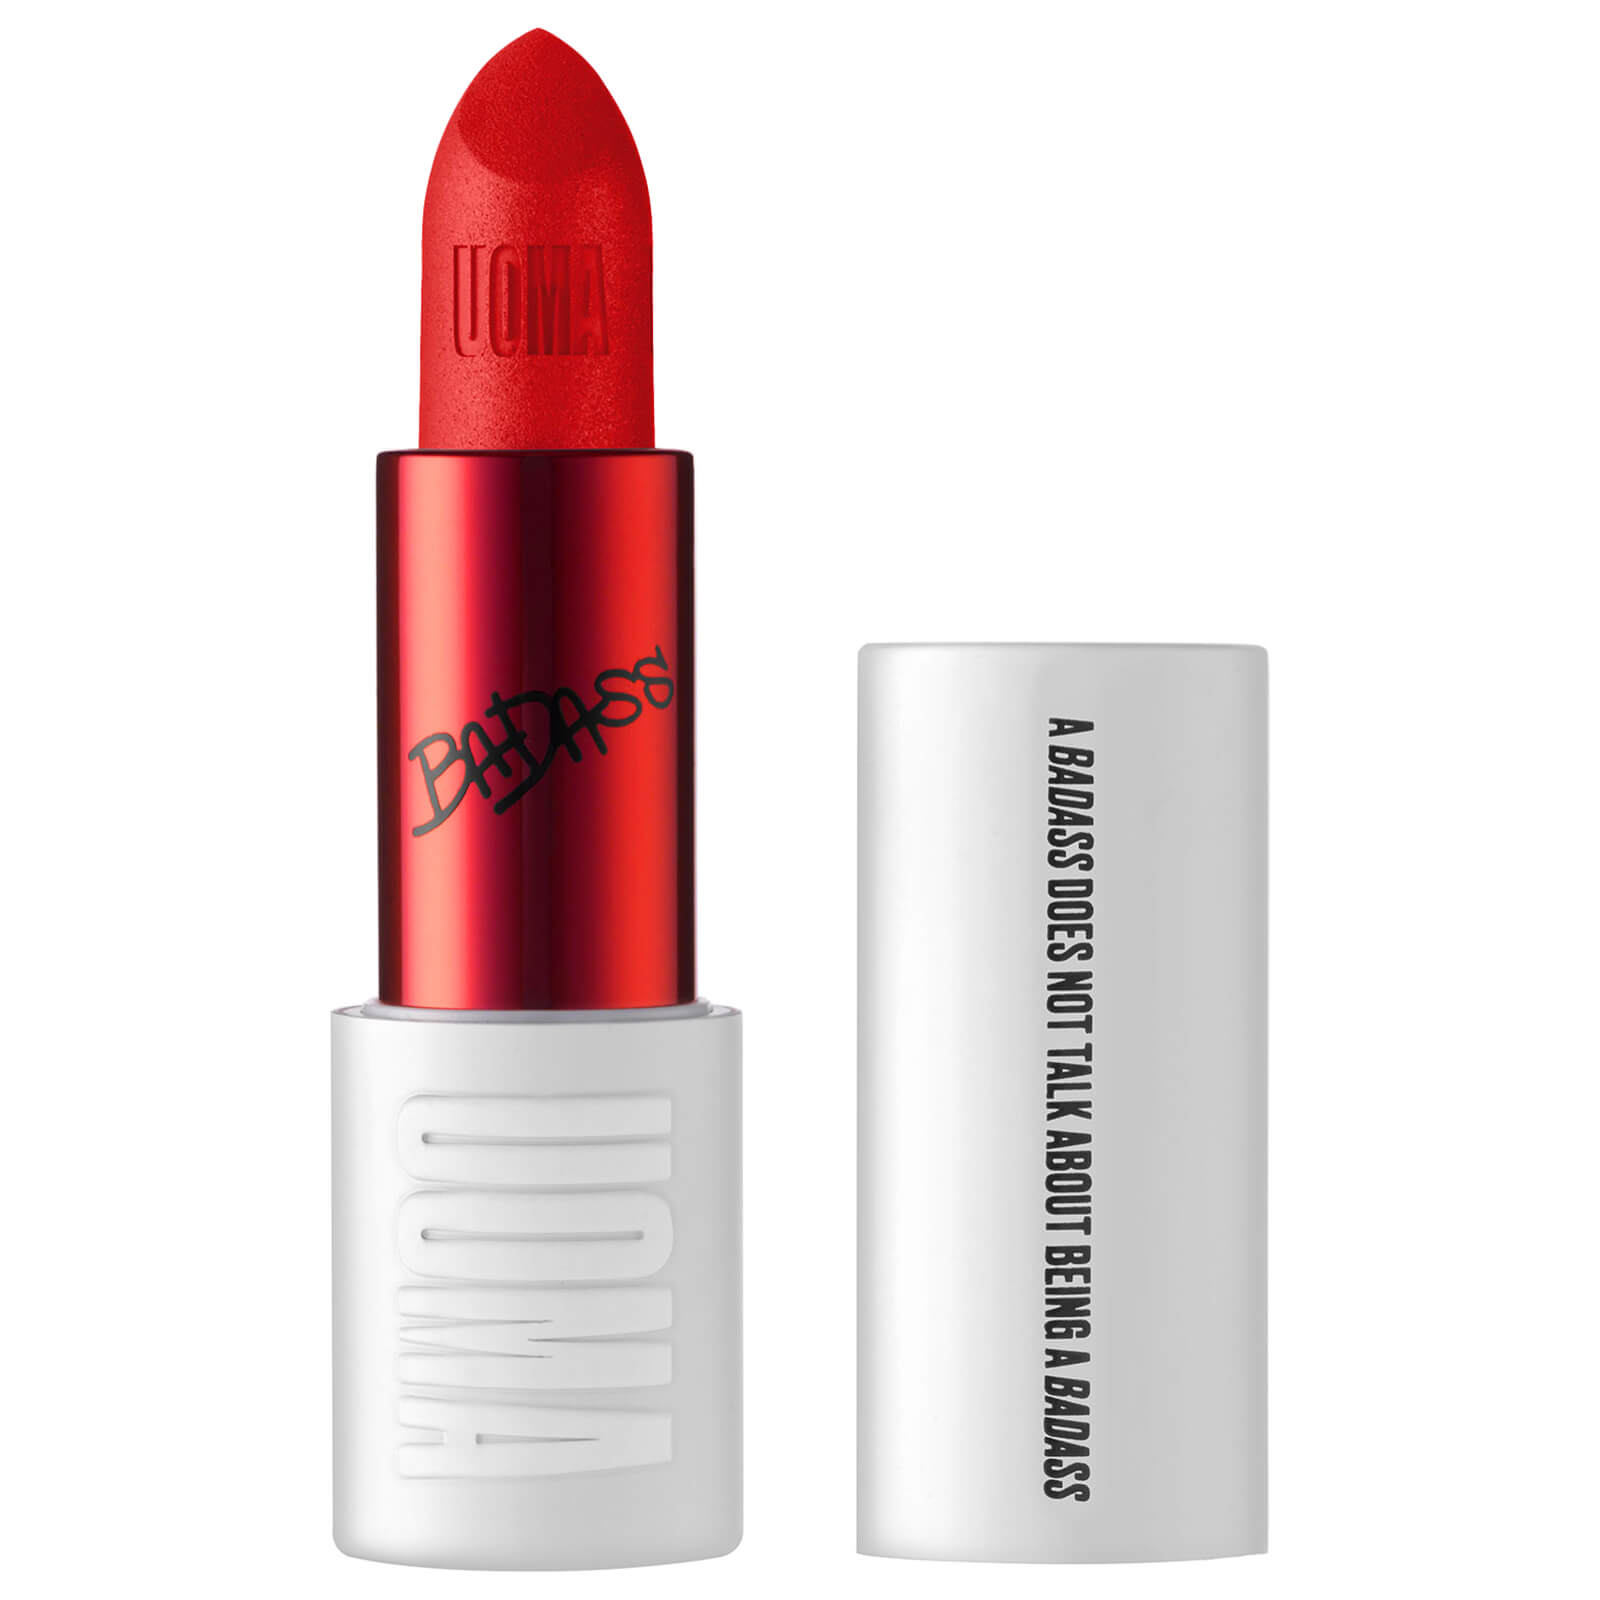 uoma beauty badass icon concentrated matte lipstick 3.5ml (verschiedene farbtÃ¶ne) - sade